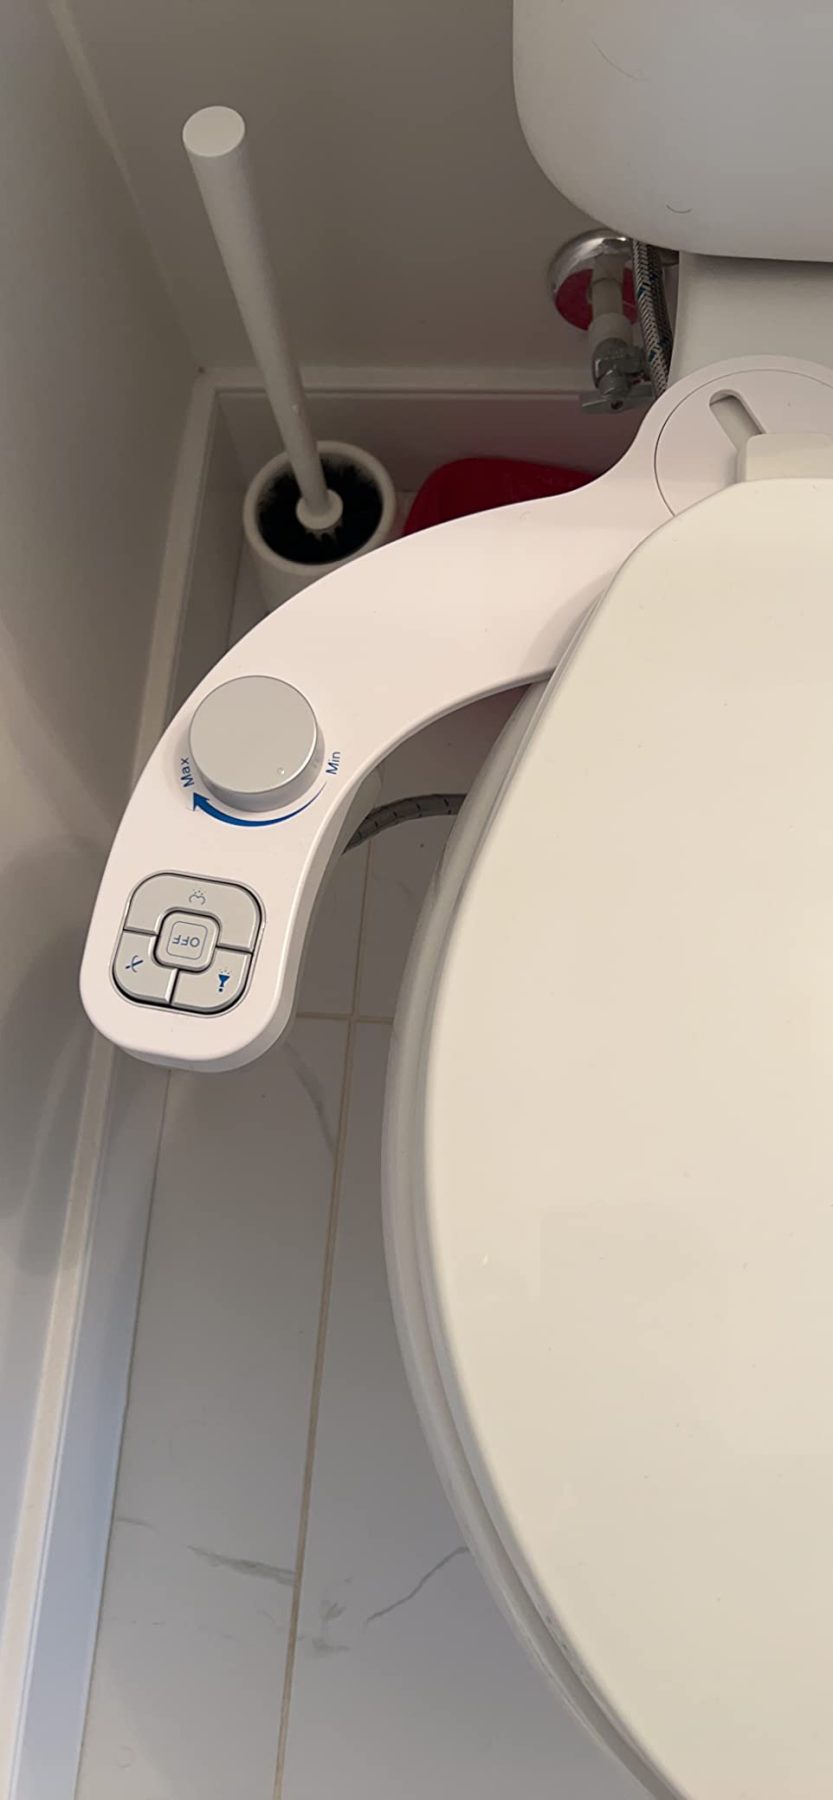 Non-Electric Bidet Toilet Water Sprayer Attachment photo review